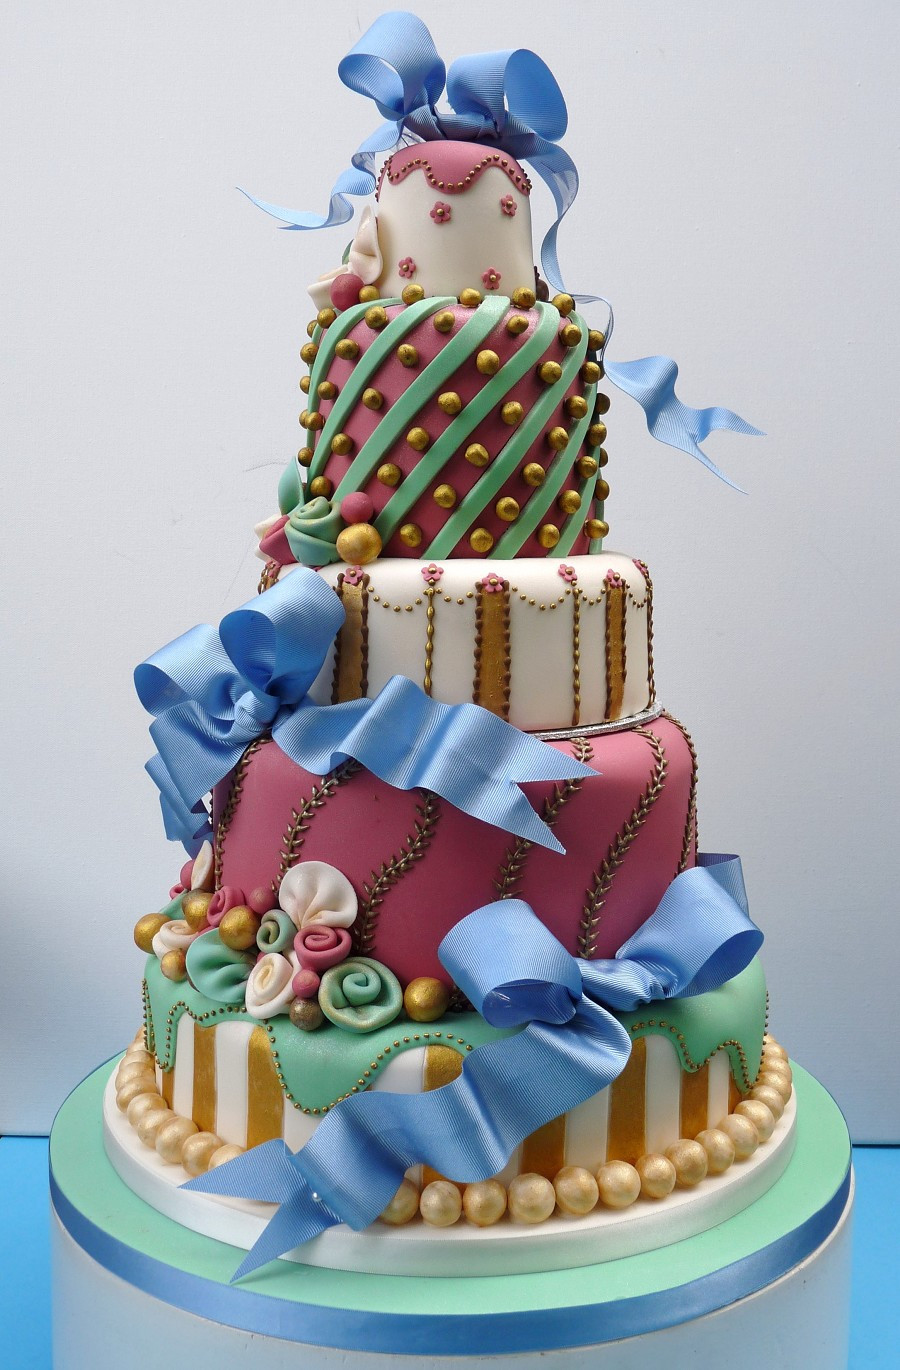 Best ideas about Amazing Birthday Cake
. Save or Pin Amazing wedding cake Now.